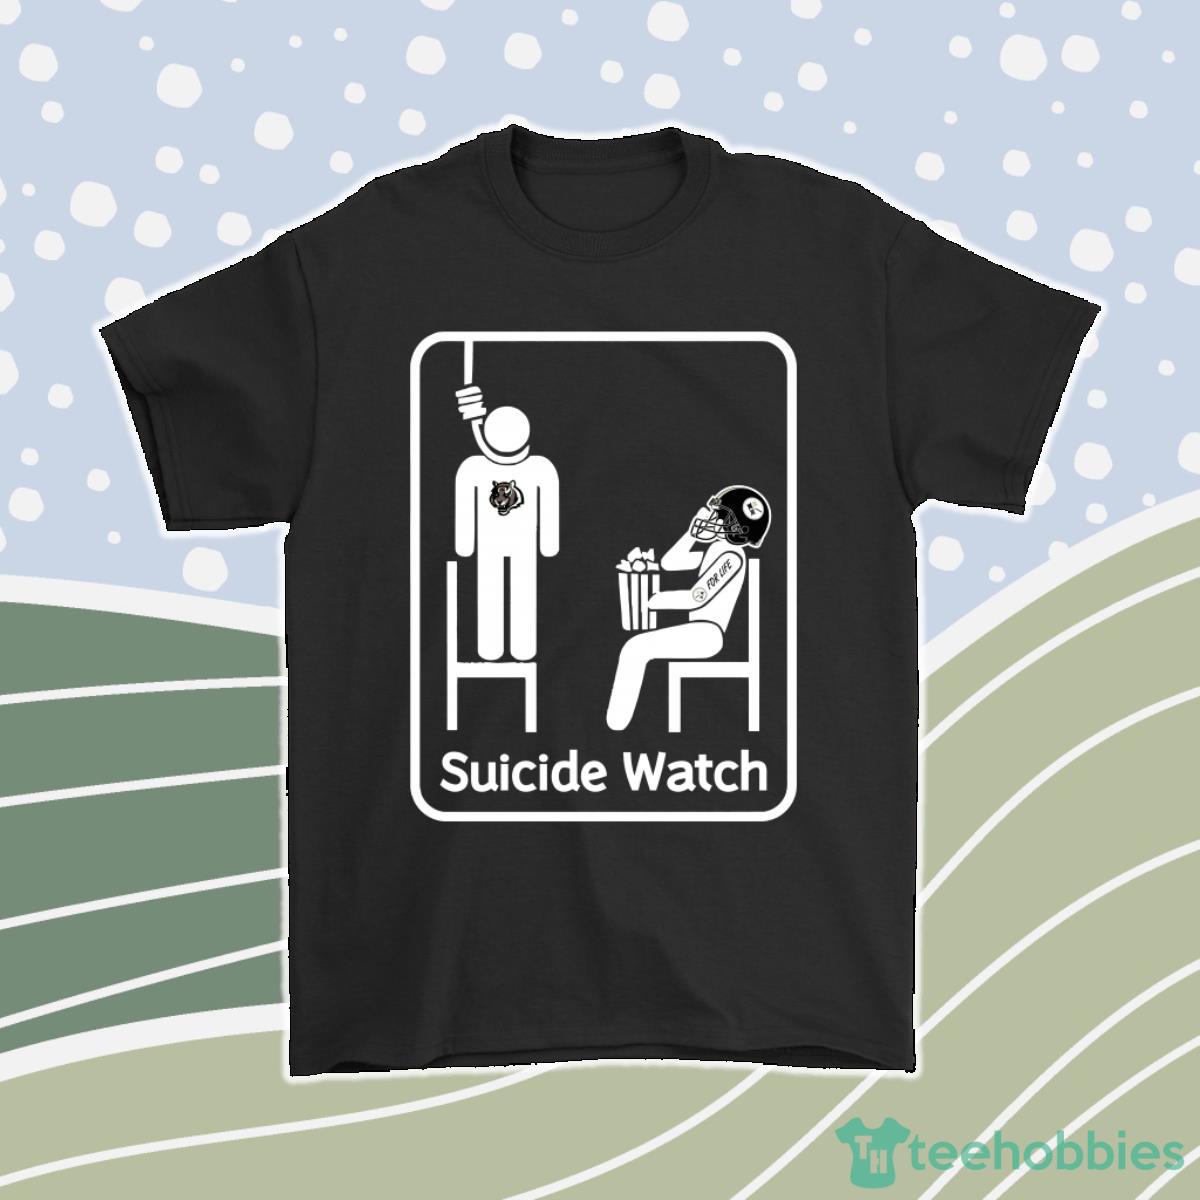 Pittsburgh Steelers Suicide Watch With Popcorn Nfl Men Women T-Shirt, Hoodie, Sweatshirt Product Photo 1